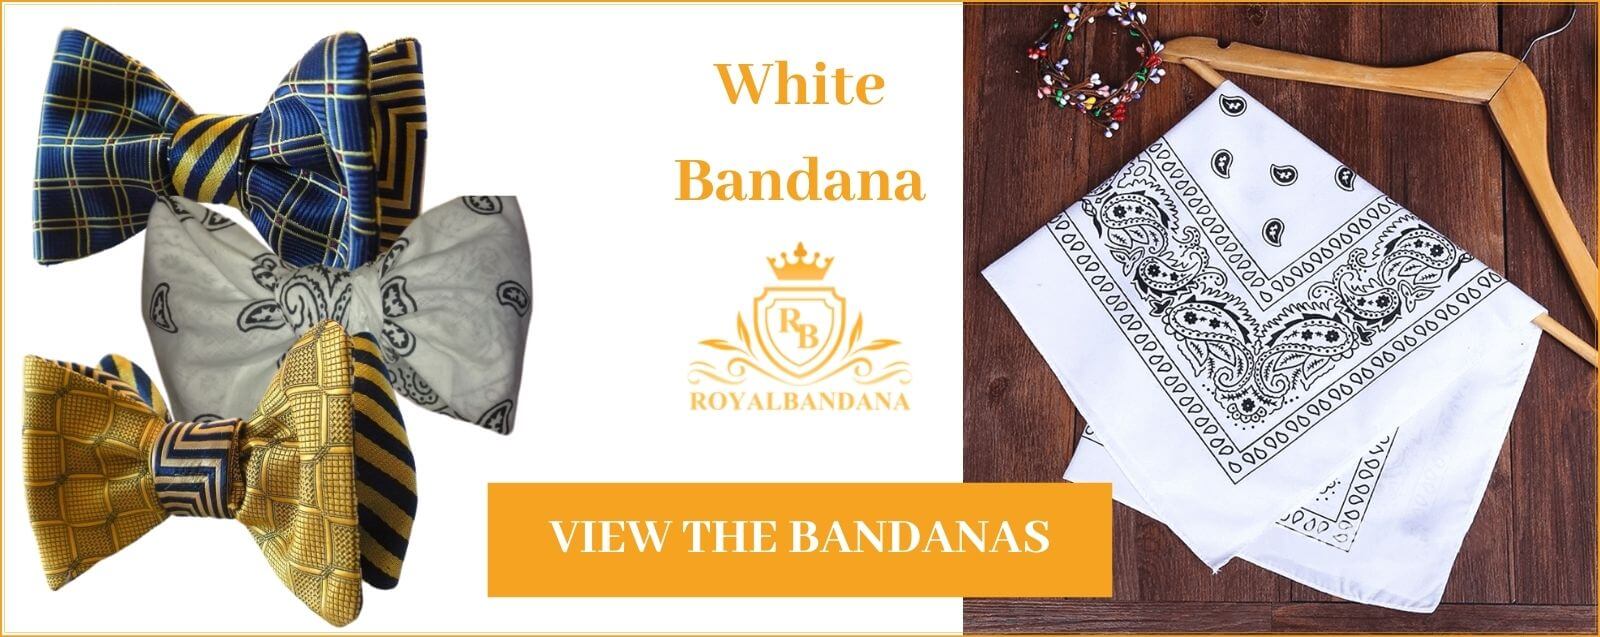 see white bandana royalbandana bow tie